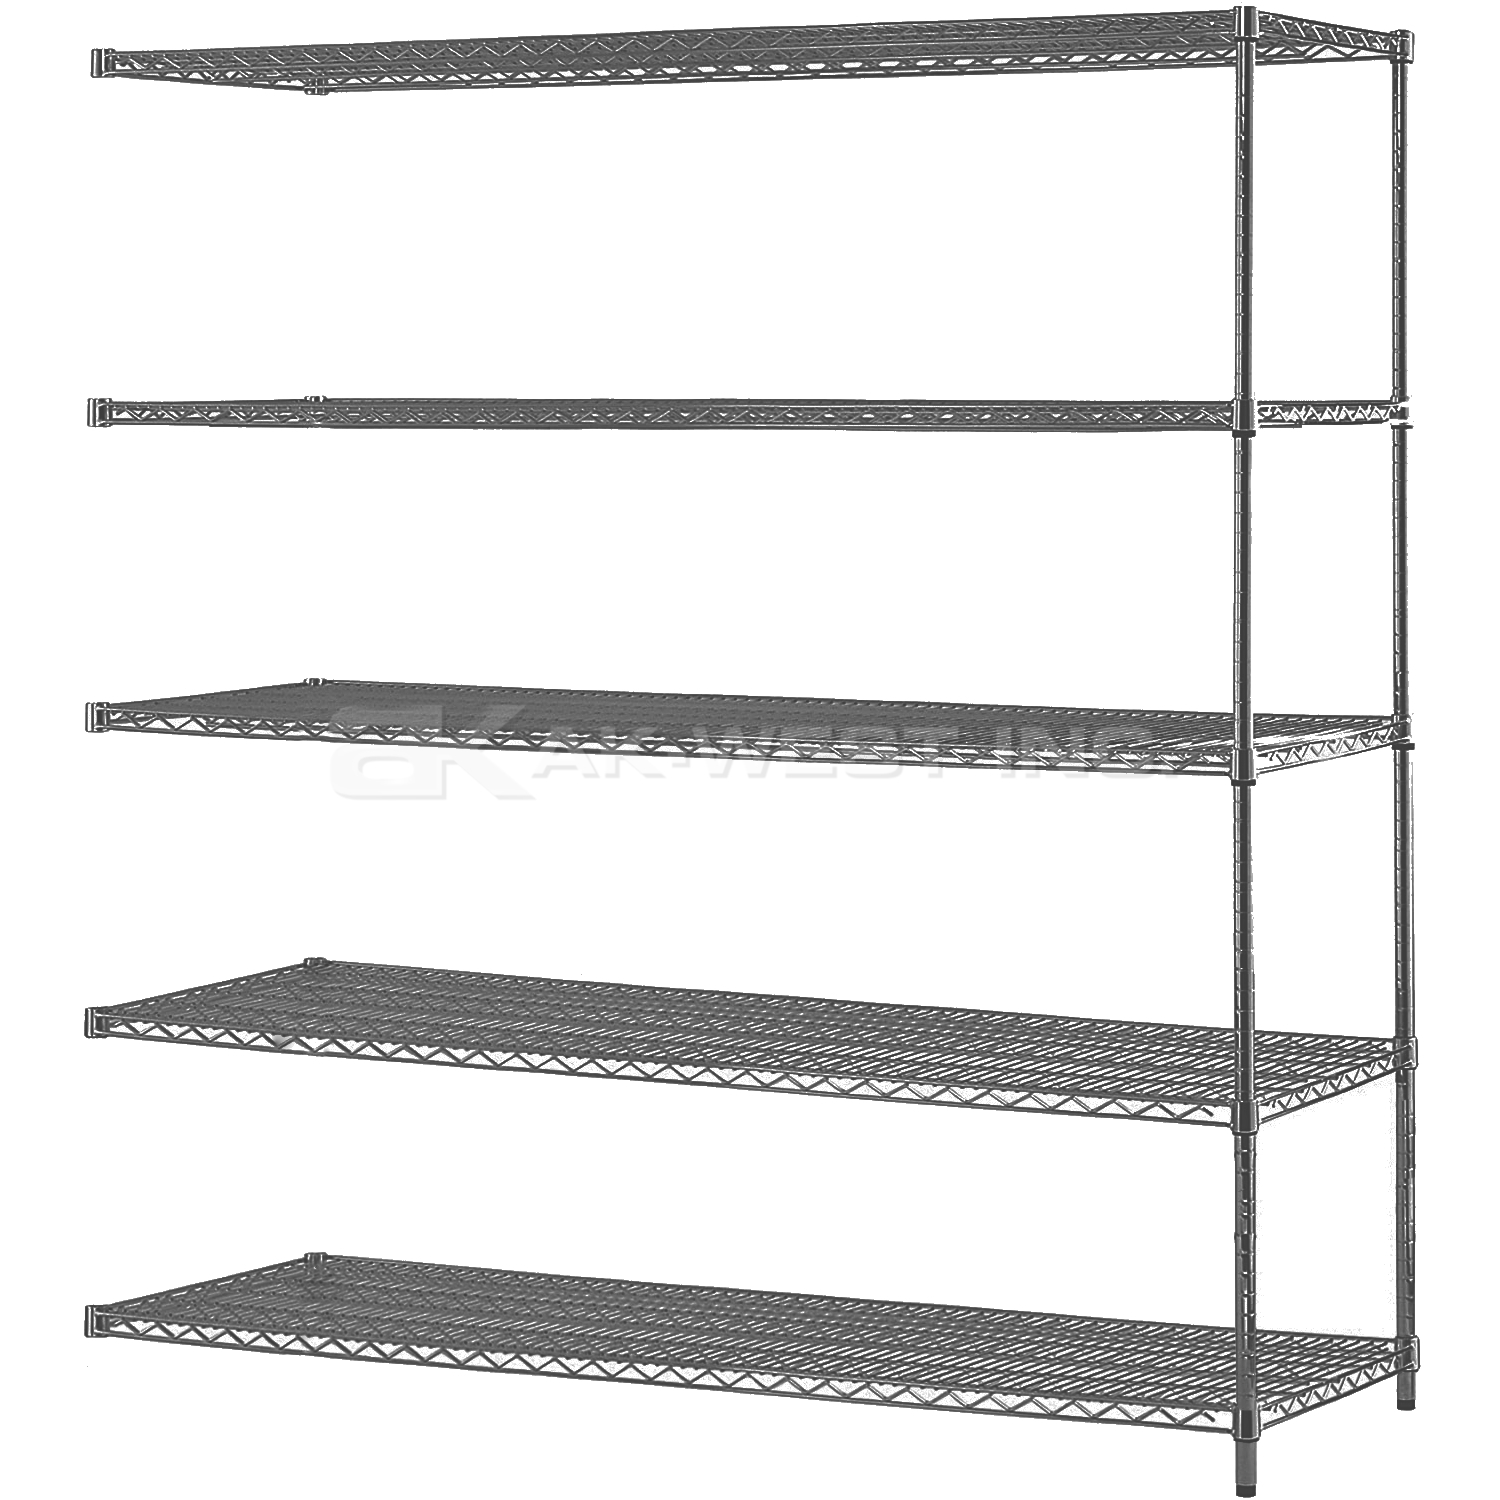 Grey, 24"D x 72"W x 96"H, 6 Shelf, Wire Shelving Adder Kit